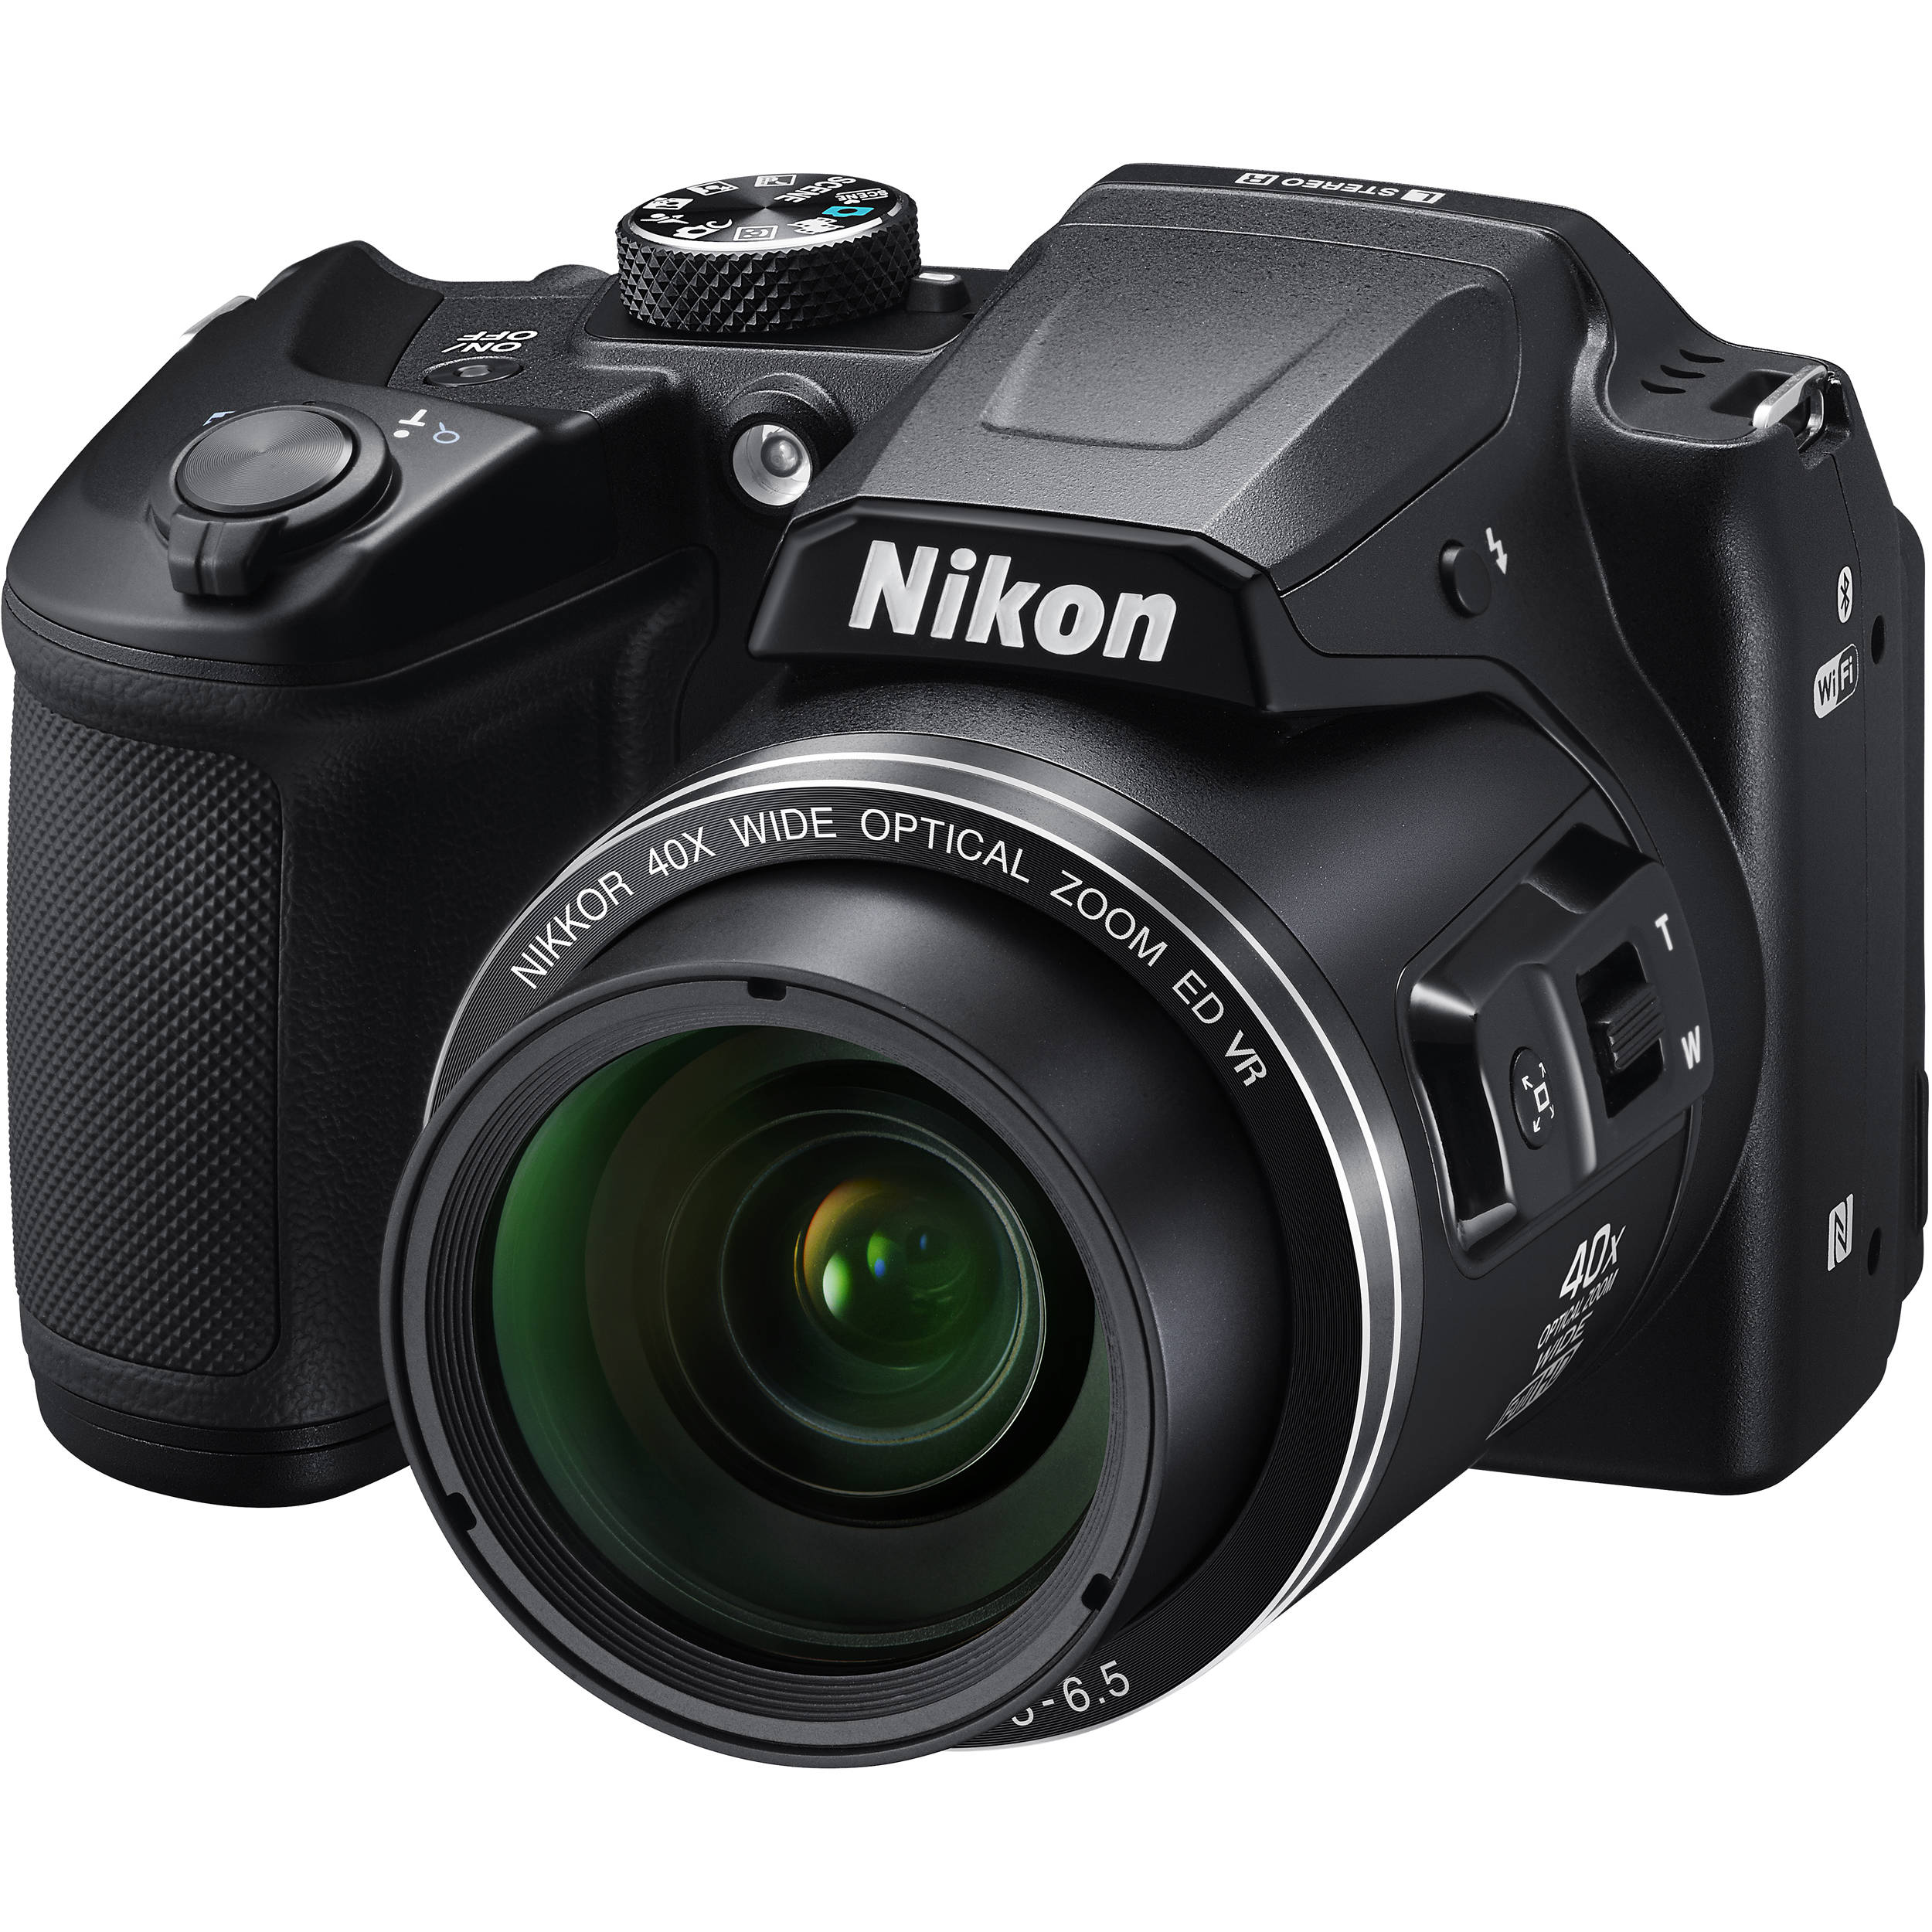 Nikon COOLPIX B500 Digital Camera (Black) 26506 B&H Photo Video